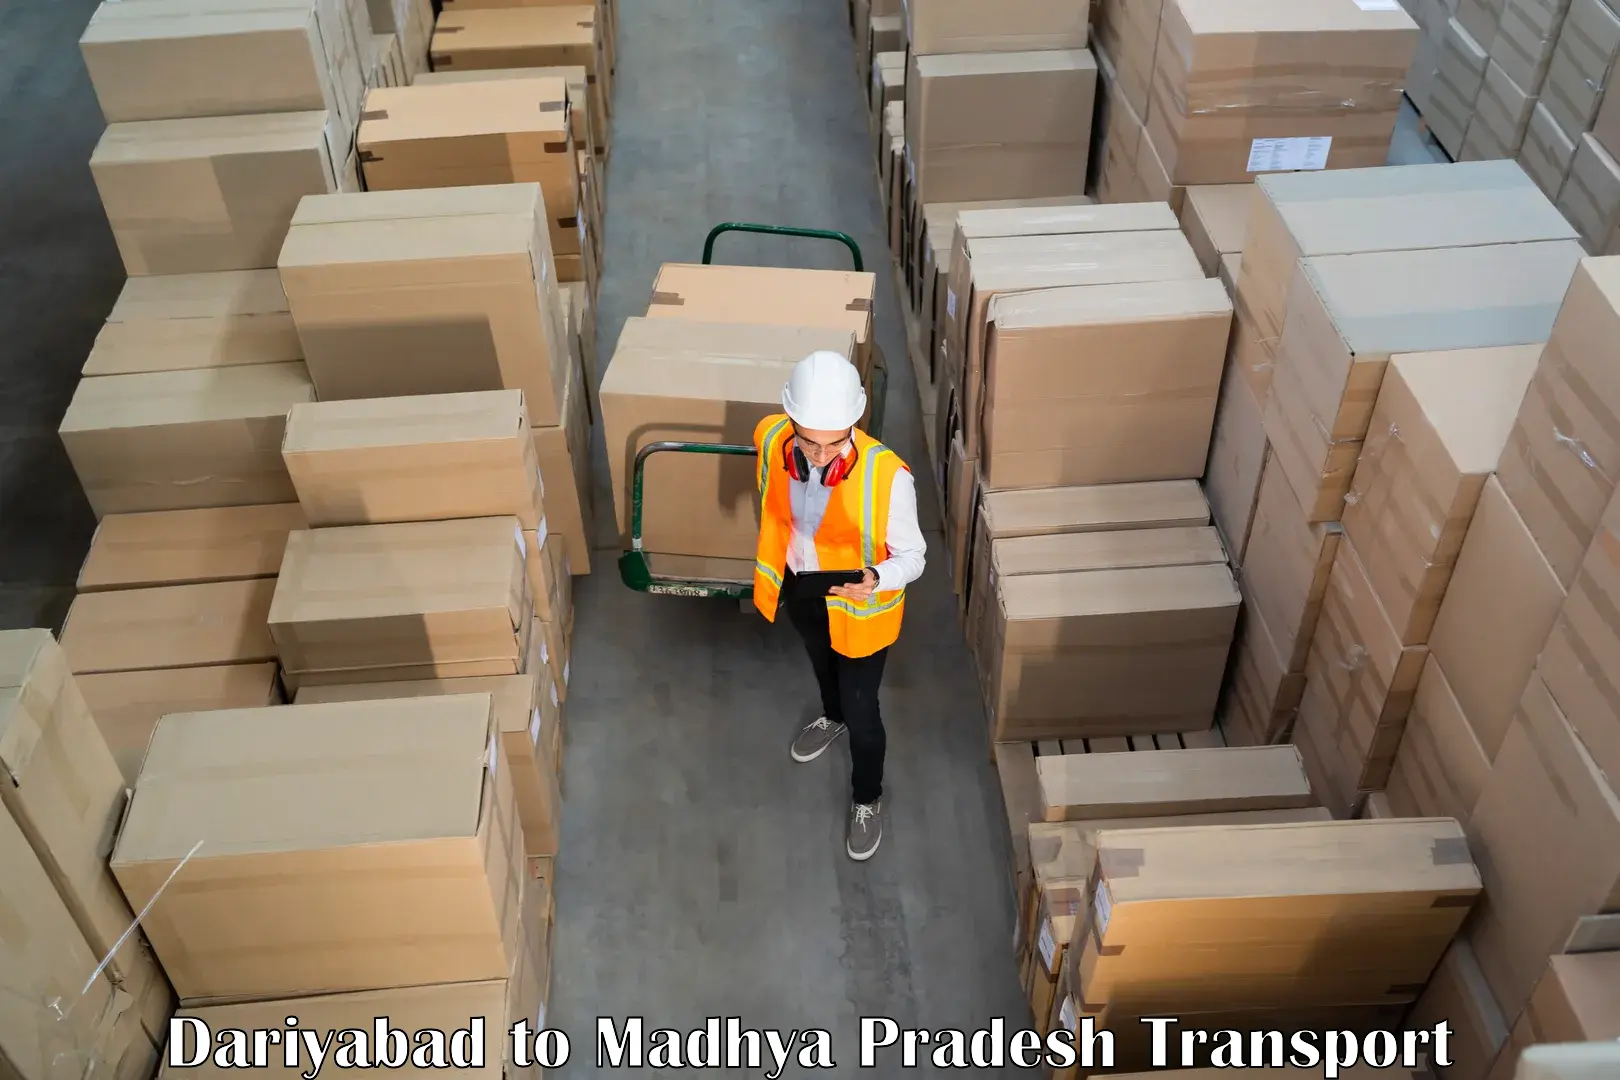 Furniture transport service Dariyabad to Madhya Pradesh